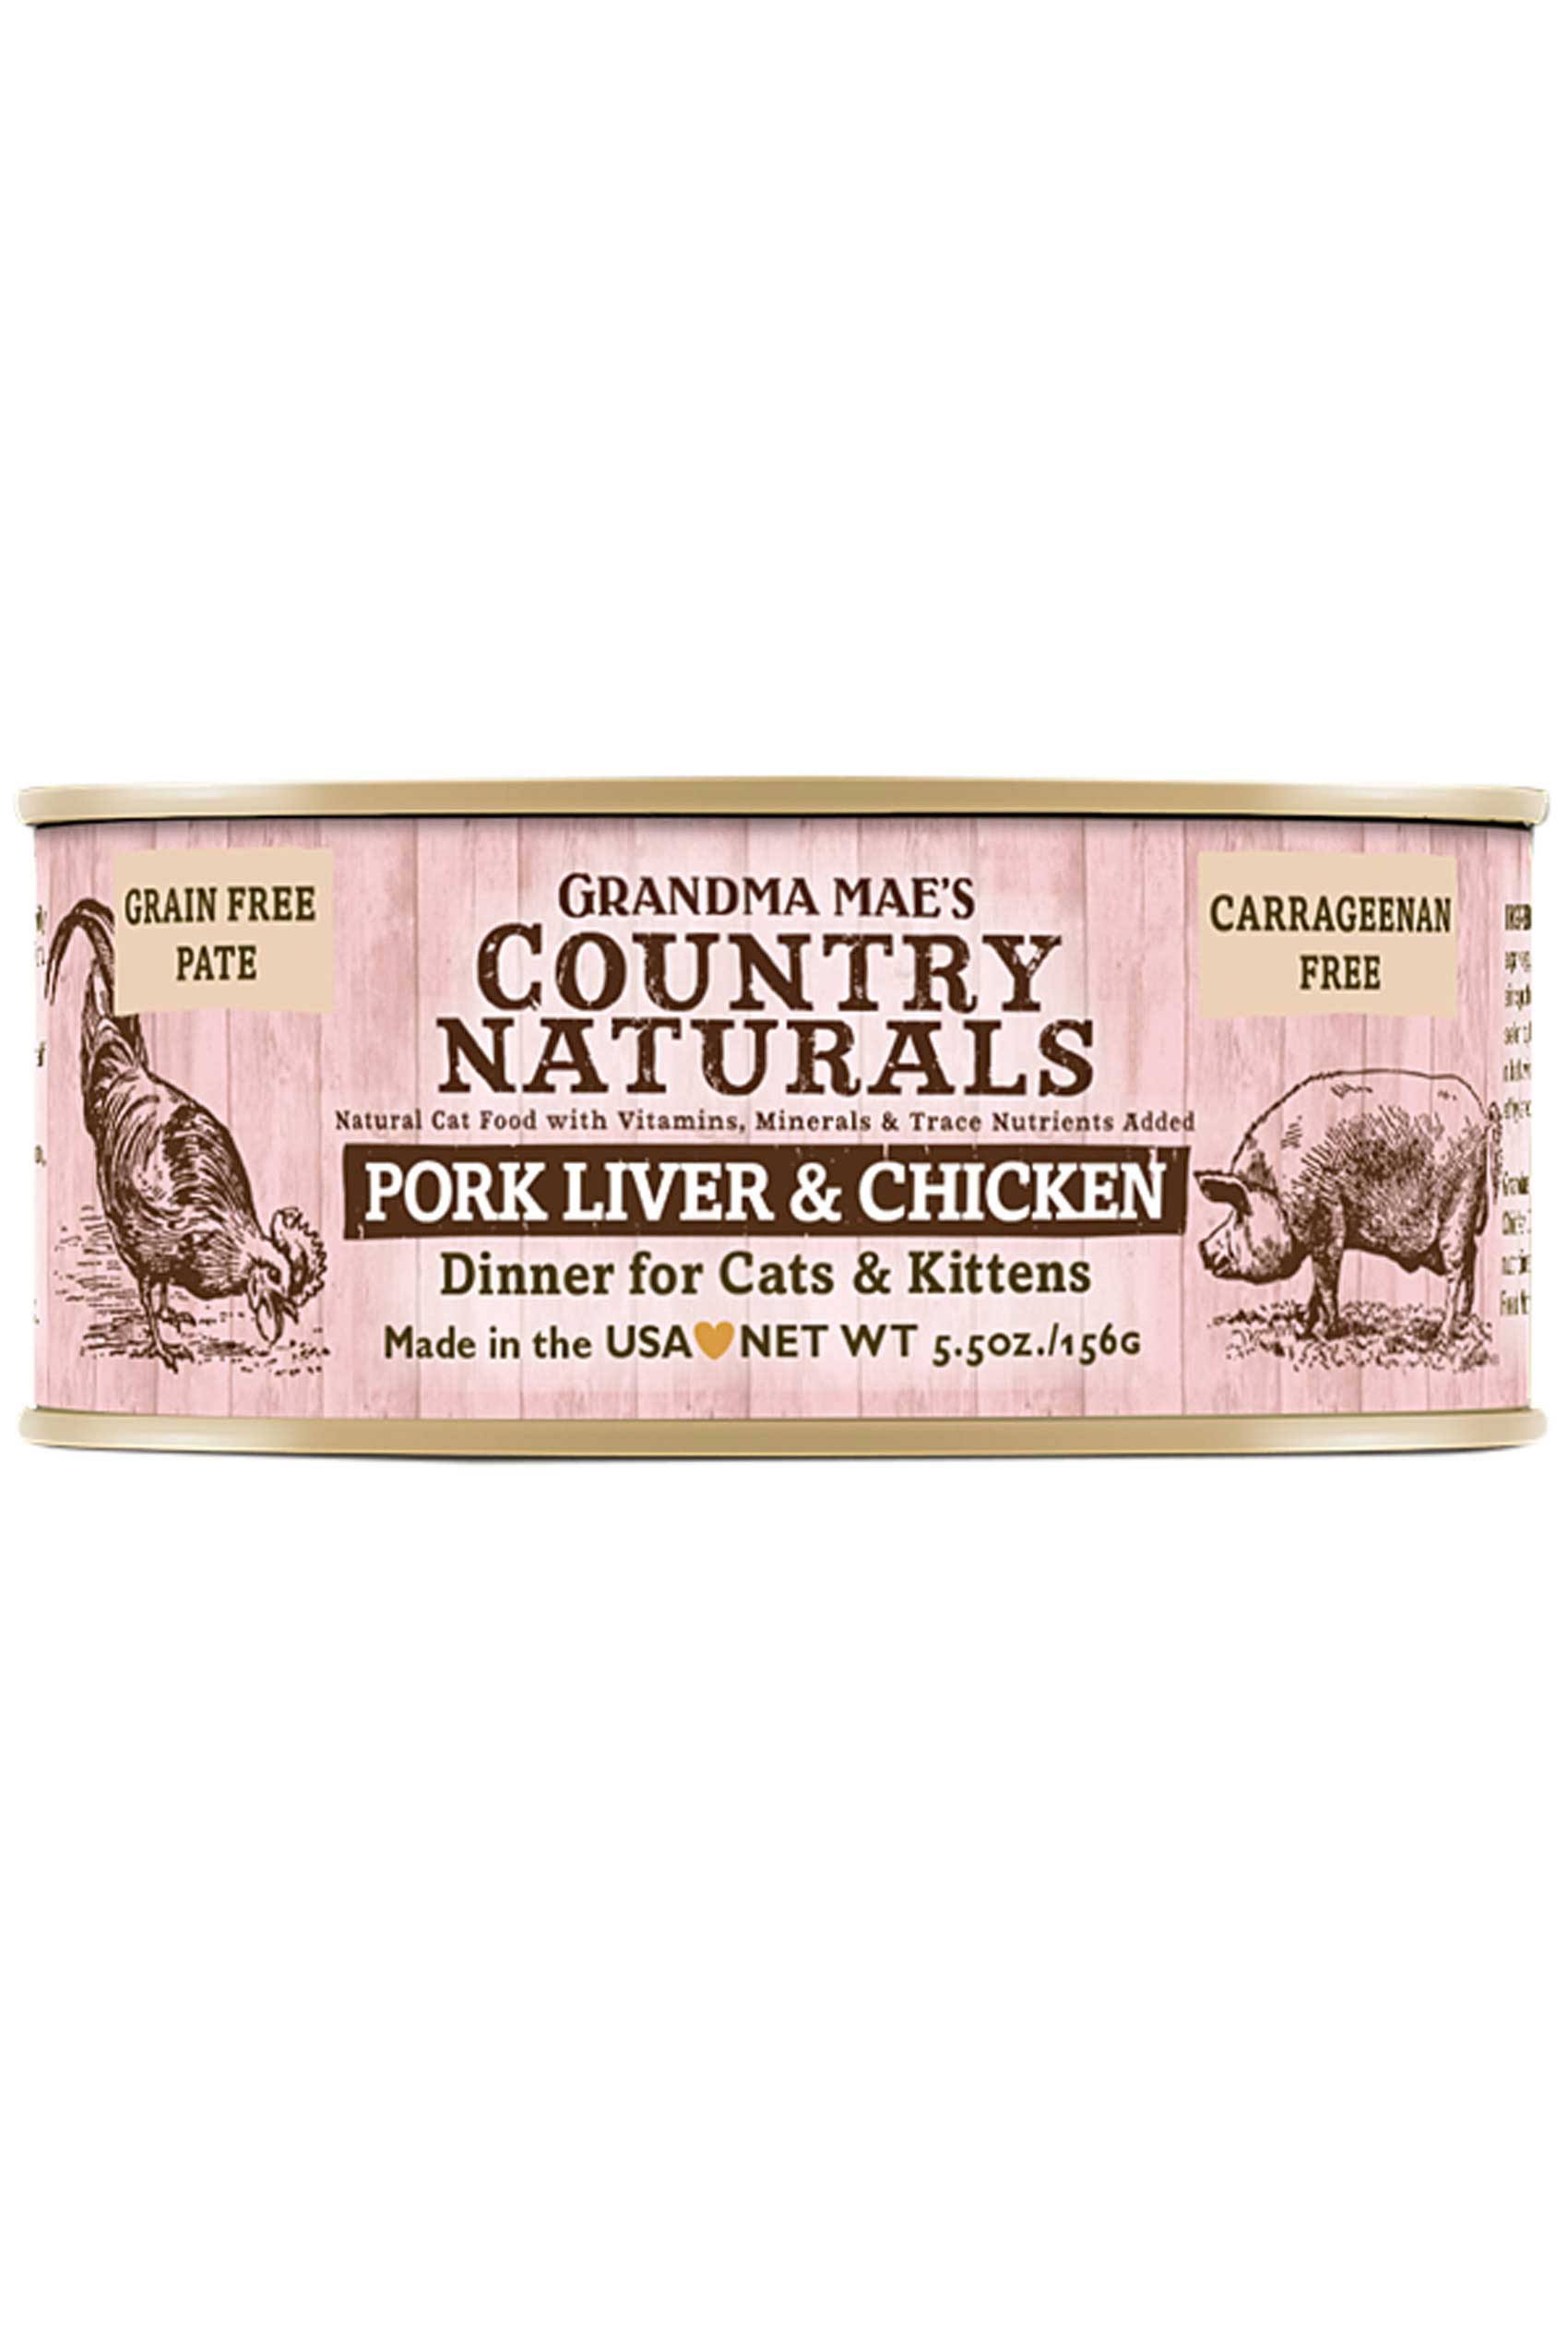 Grandma Maes Country Naturals Cat Food - Pork & Chicken